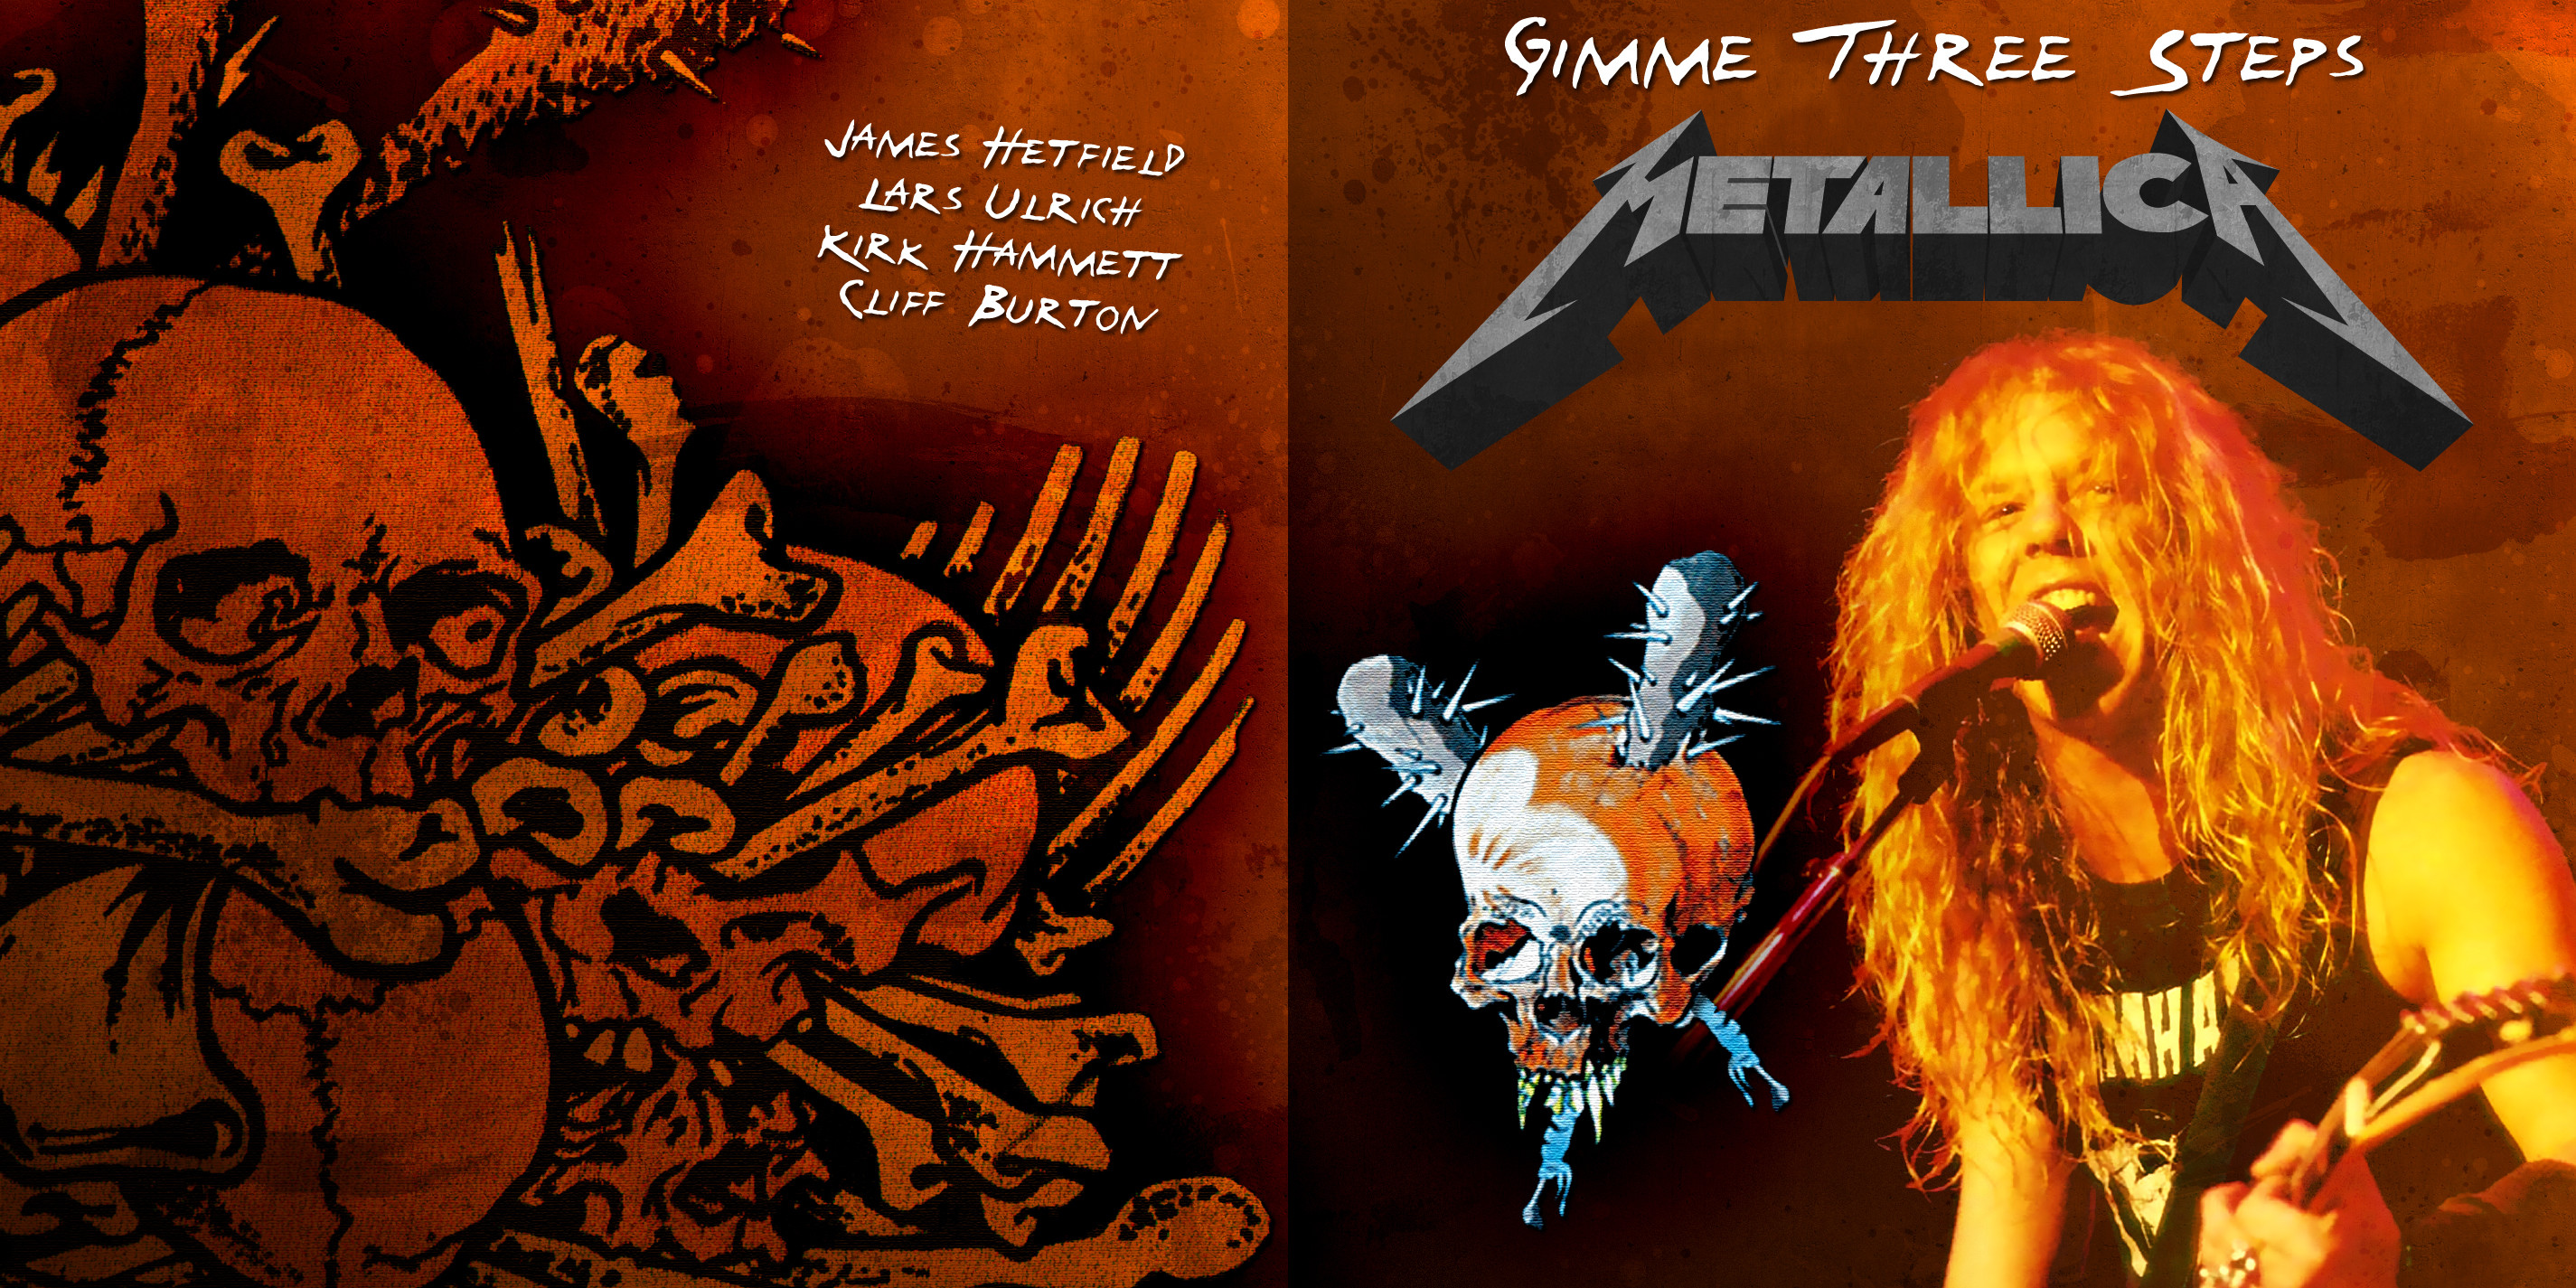 2850x1425 METALLICA thrash metal heavy album cover art poster posters concert  concerts guitar guitars dark skull skulls f wallpaper